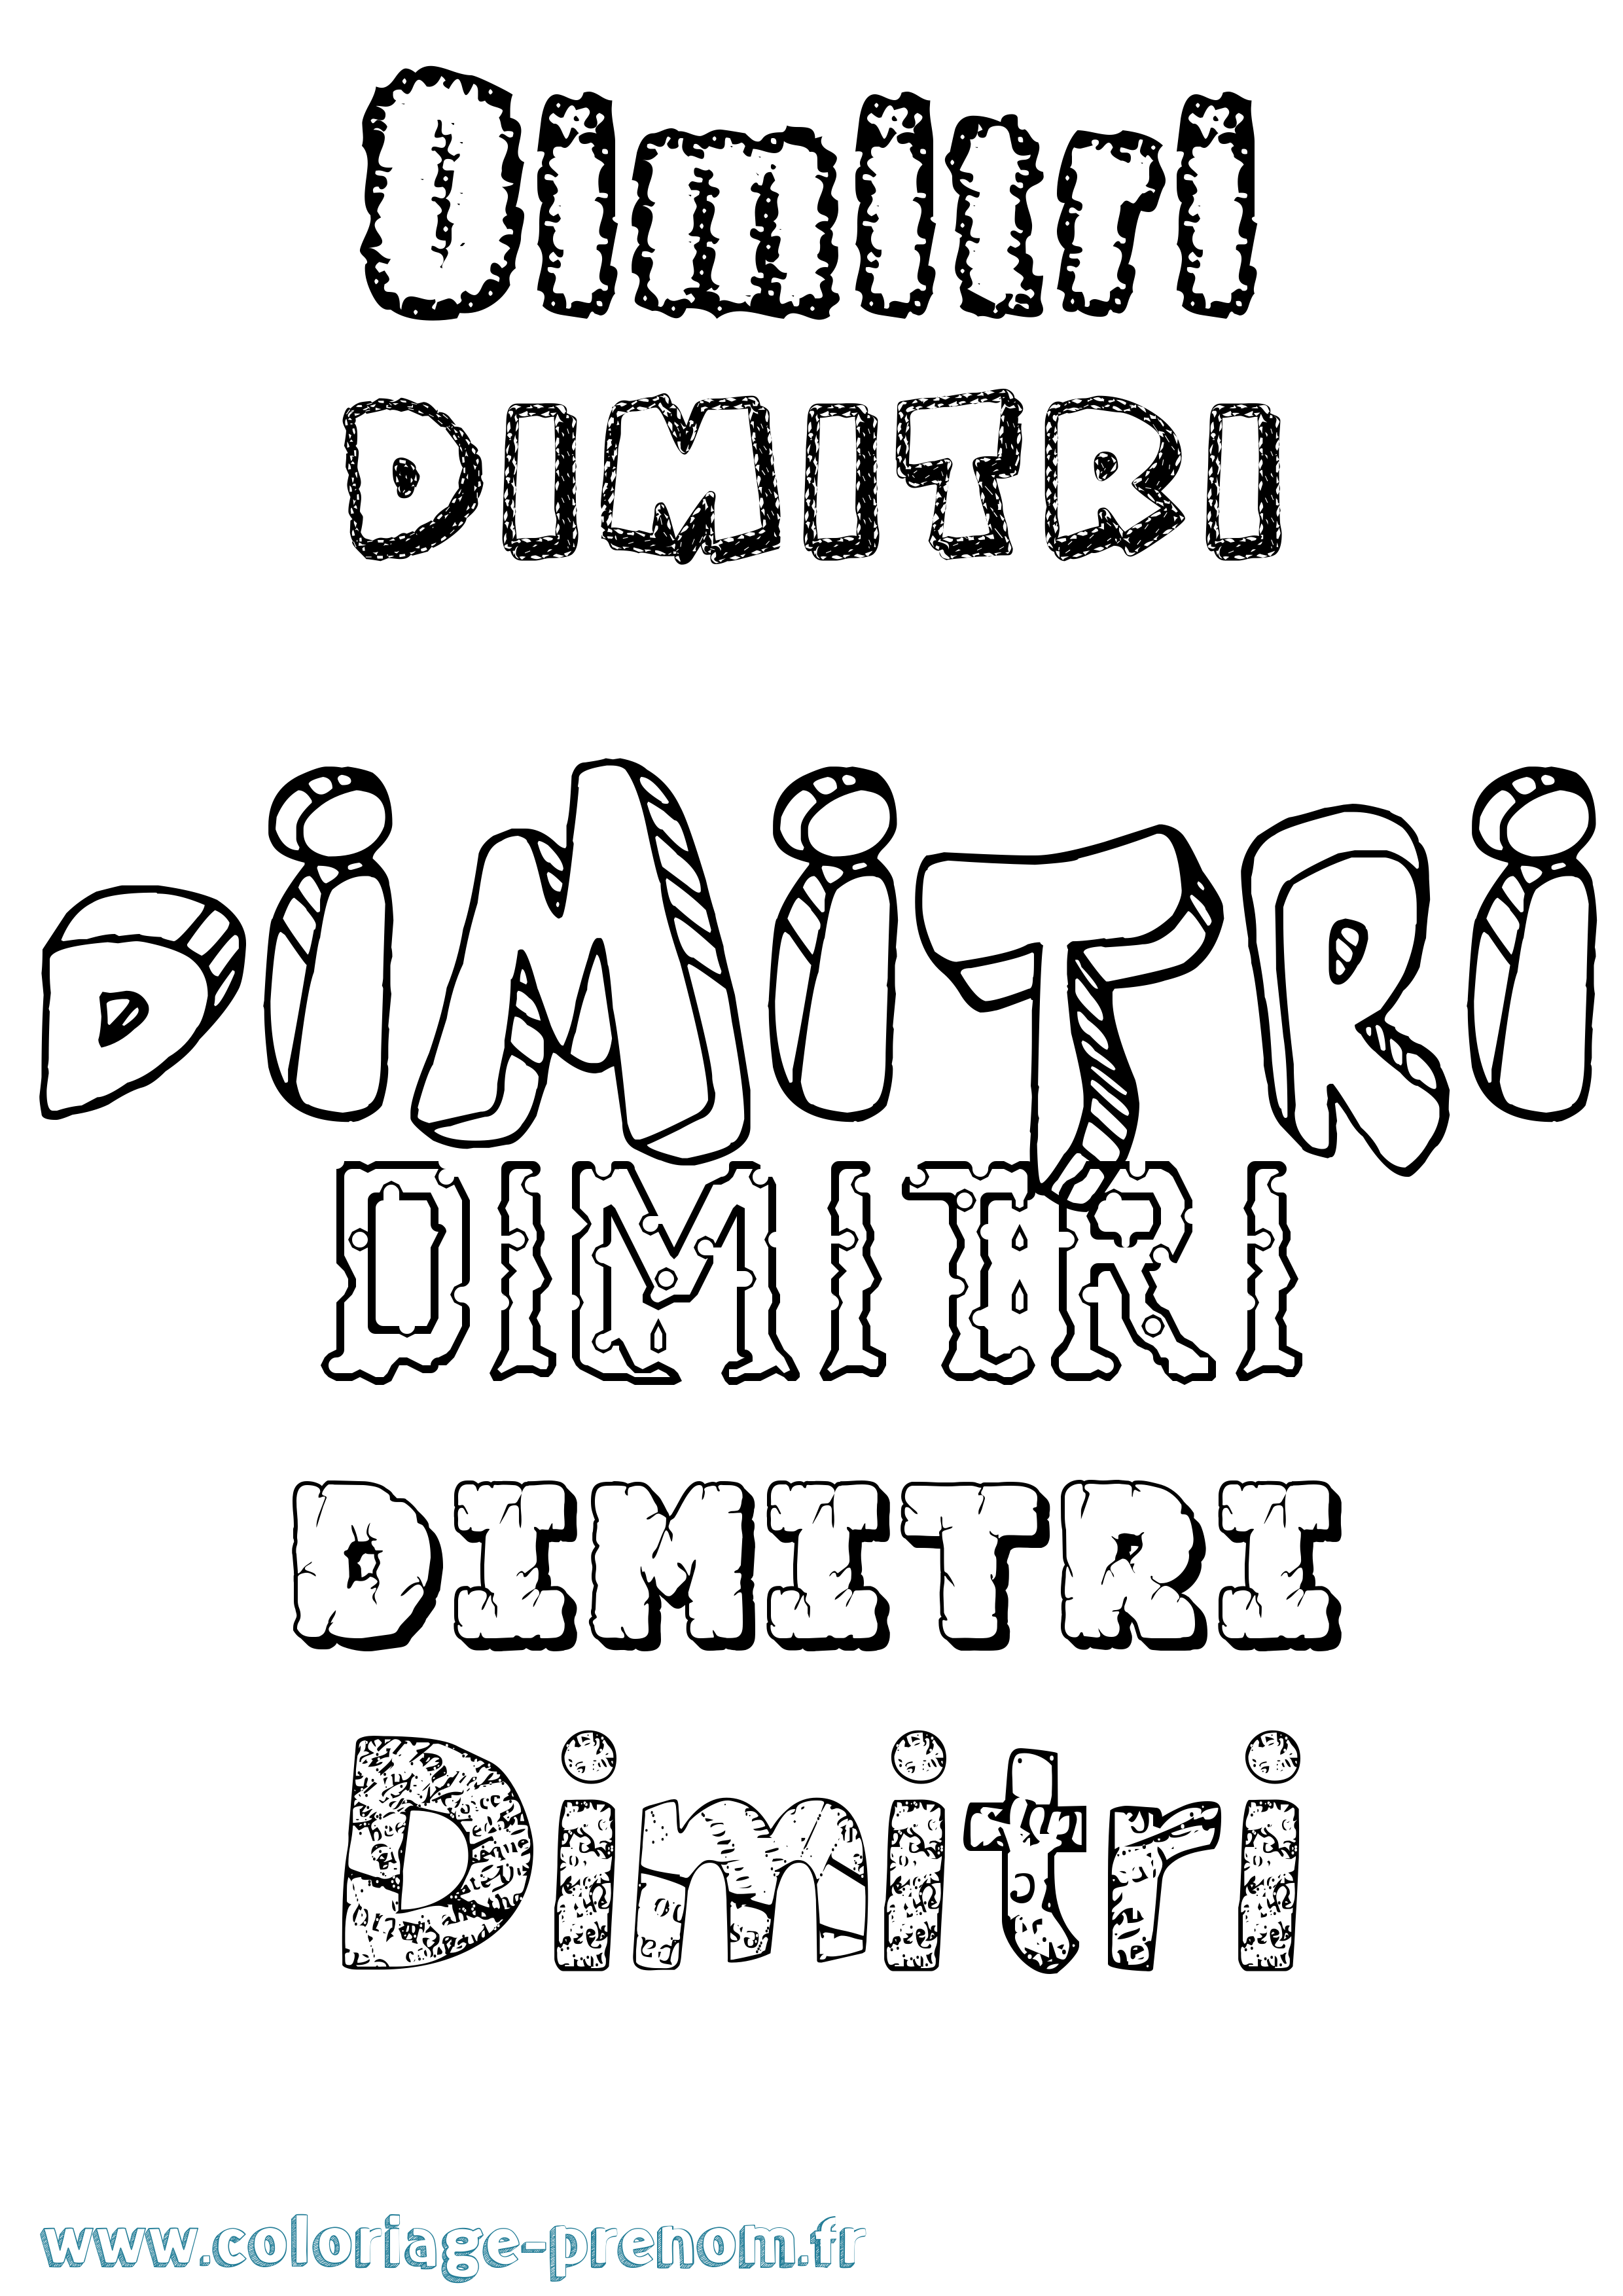 Coloriage prénom Dimitri